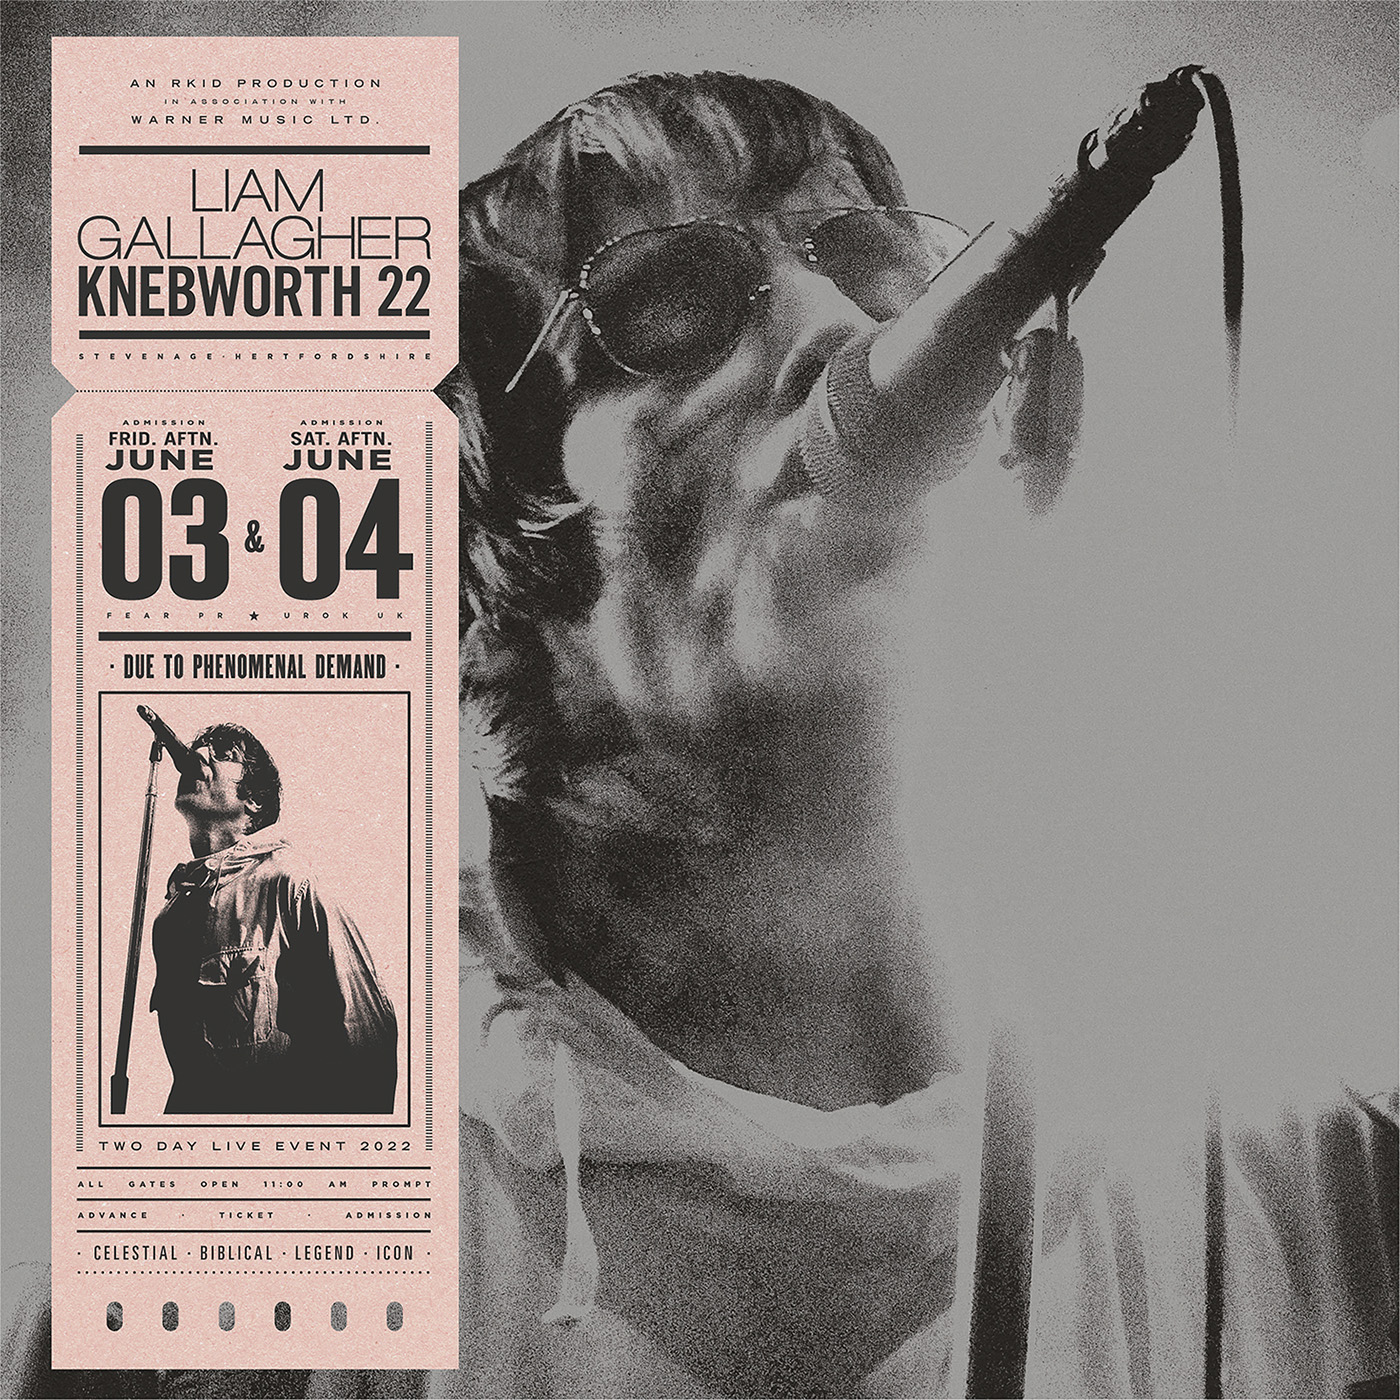 Liam Gallagher 'Knebworth 22' Album Artwork